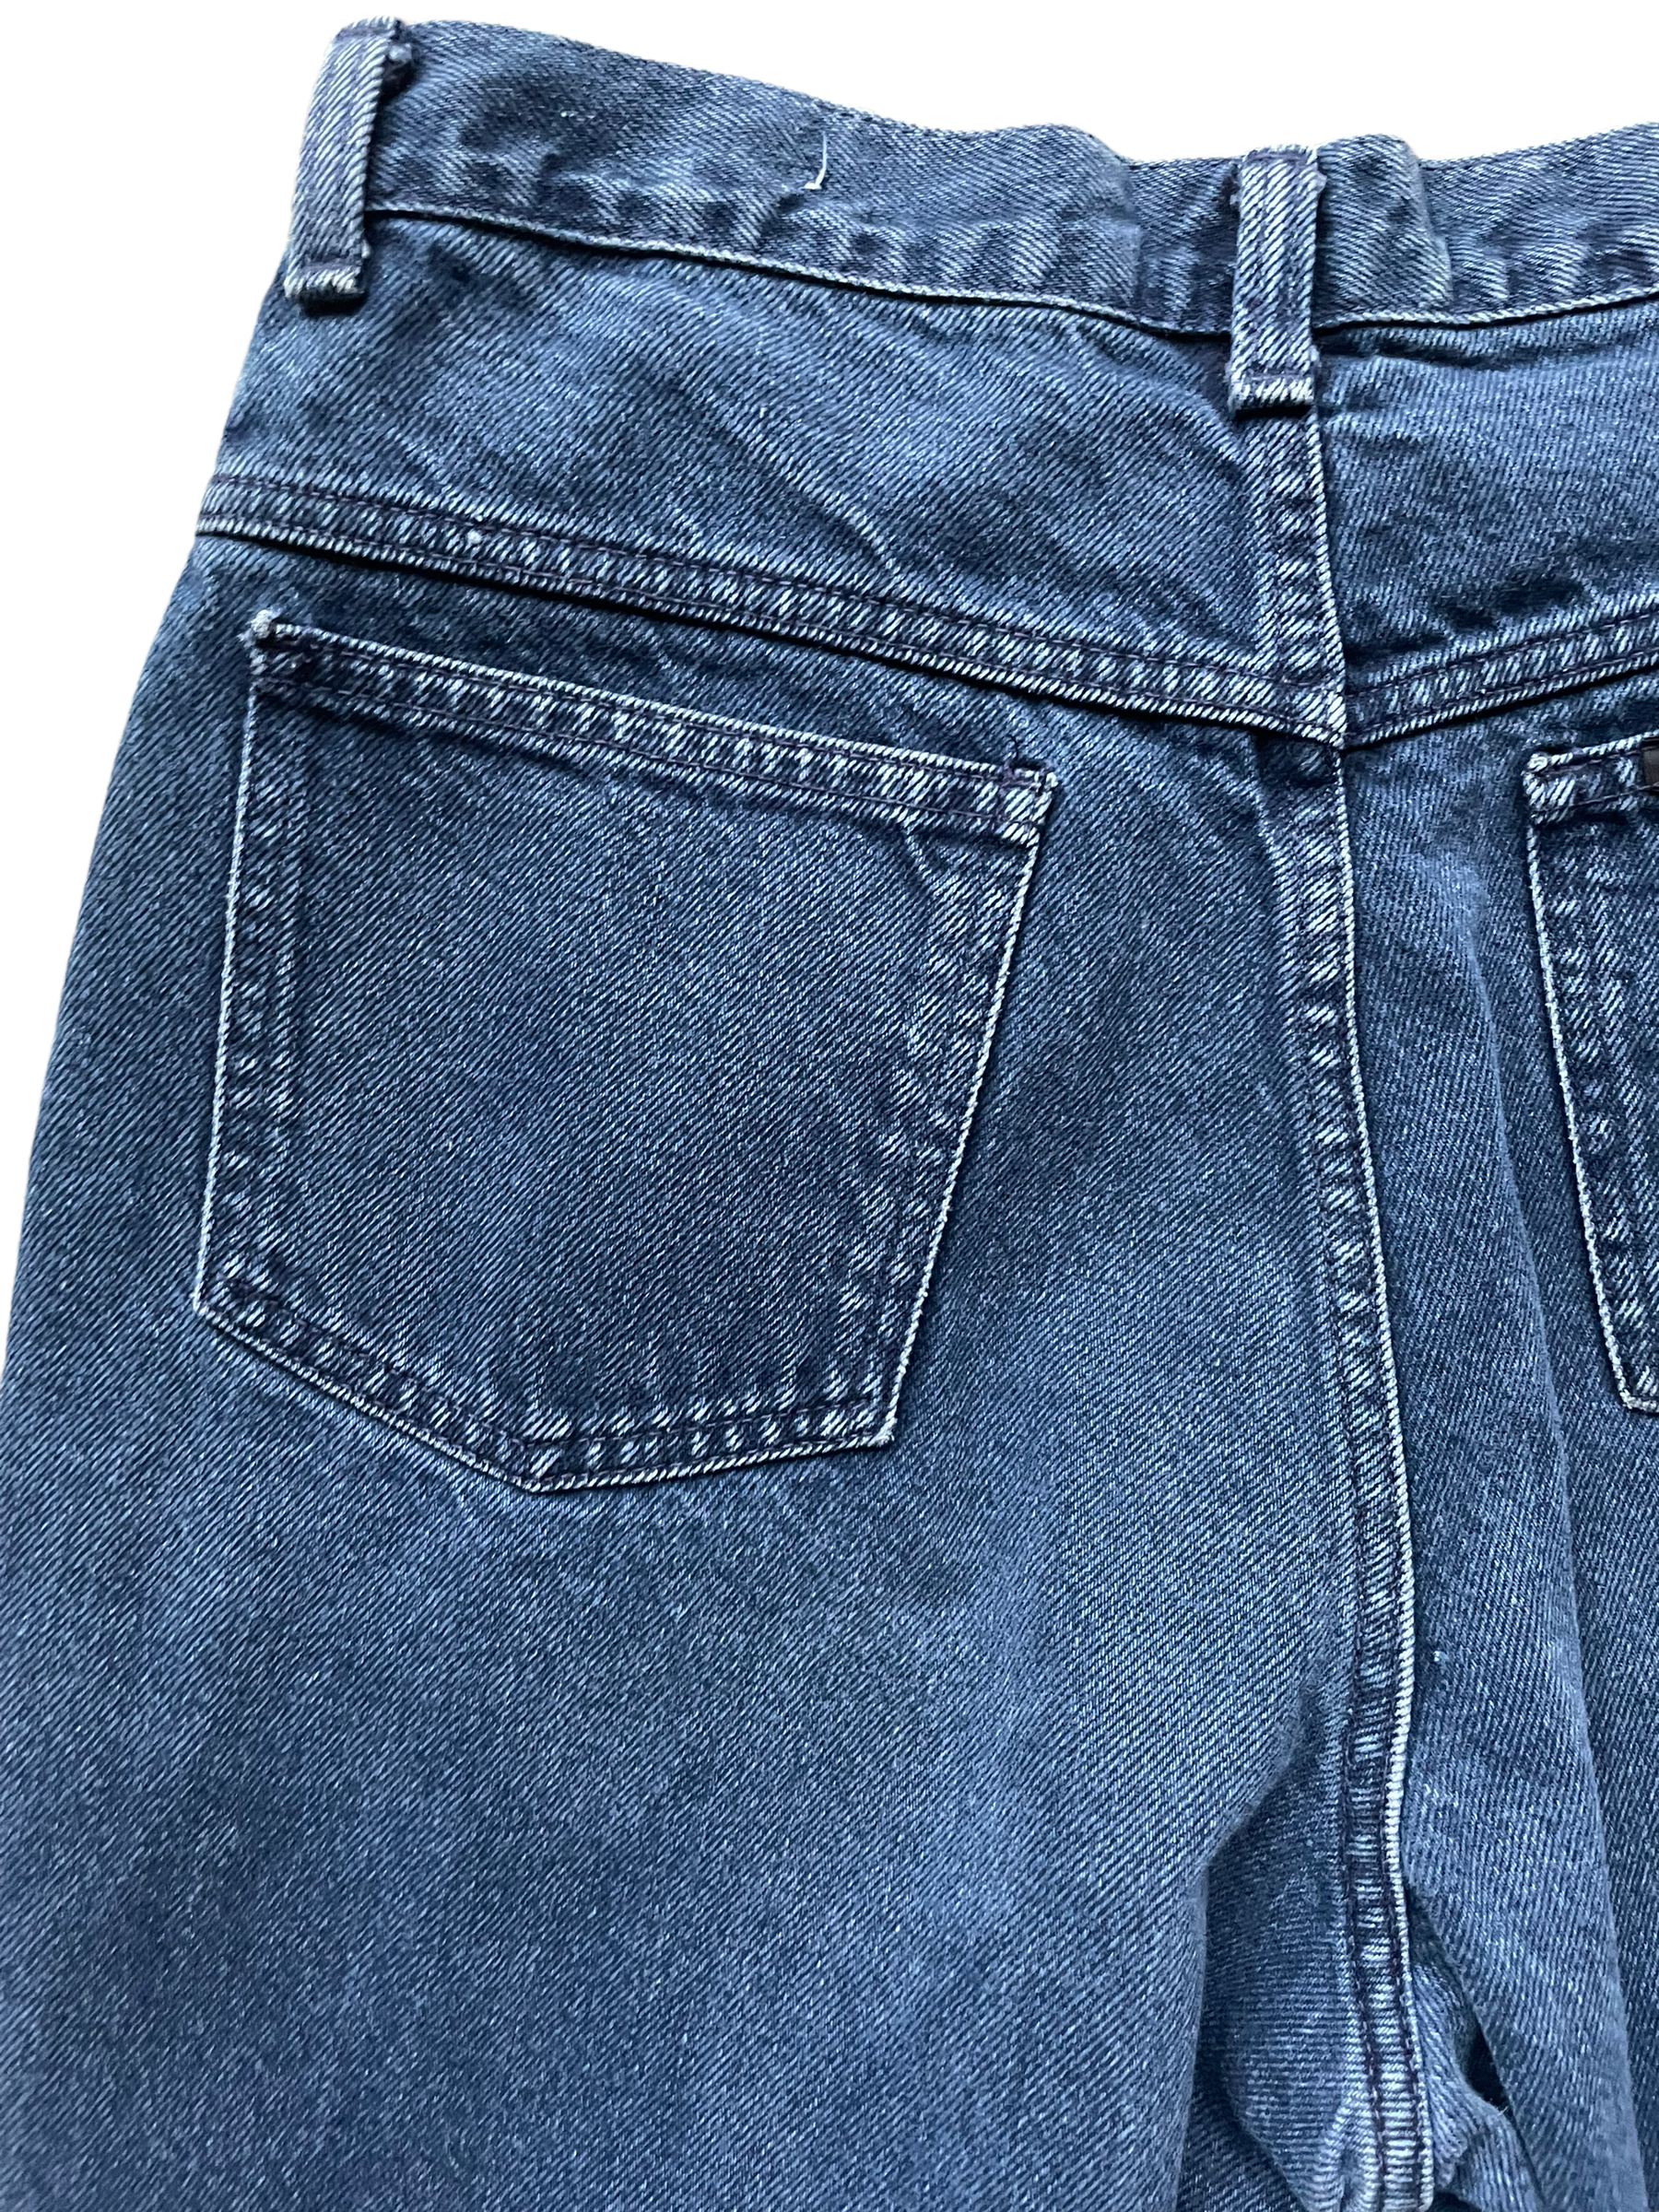 Left back pocket view of Vintage 1980s Sasson Ladies Jeans | Barn Owl Seattle | Vintage Ladies Jeans and Pants